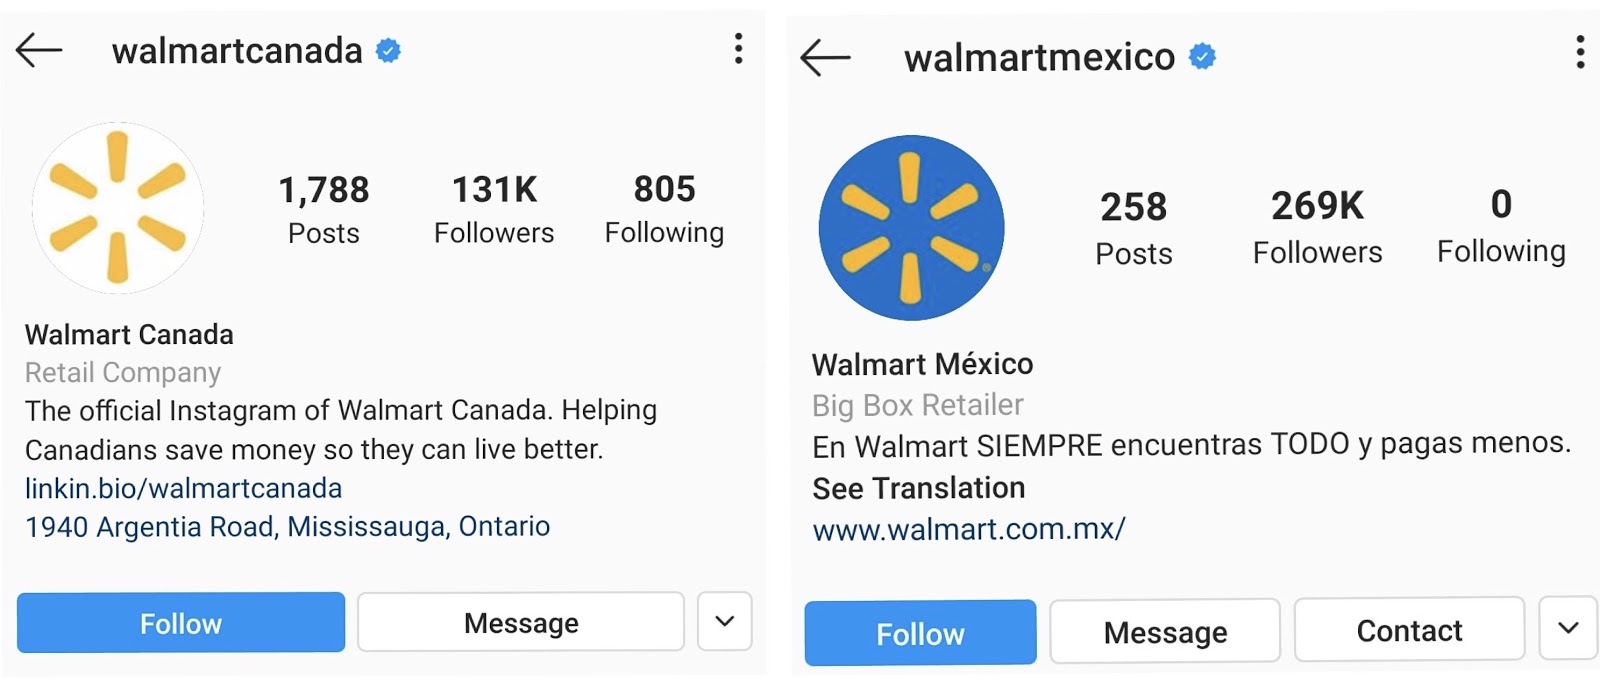 Instagram bios for Walmart accounts